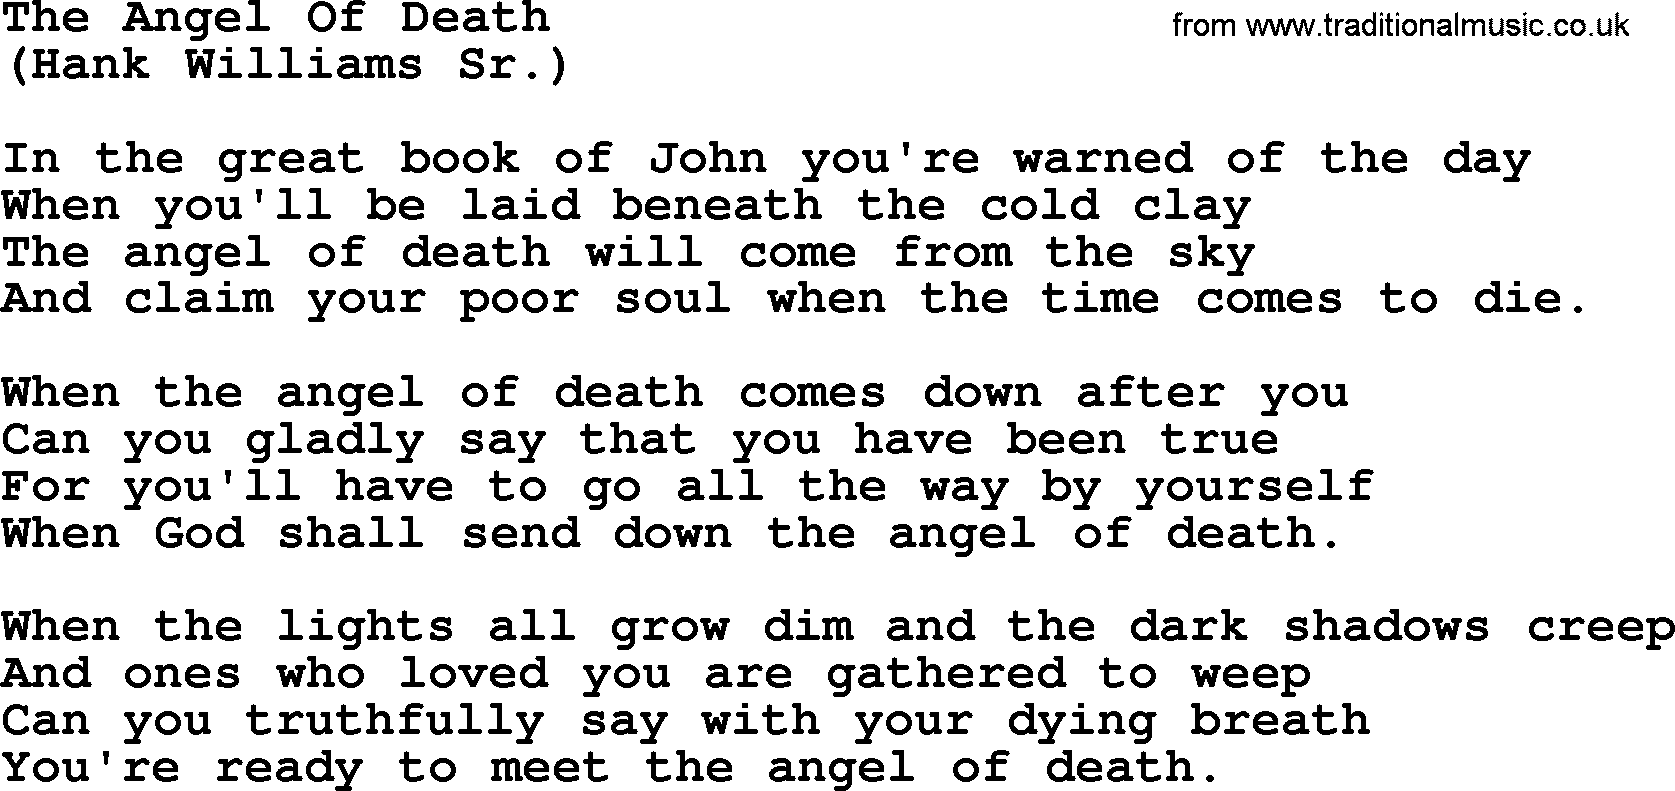 Hank Williams song The Angel Of Death, lyrics